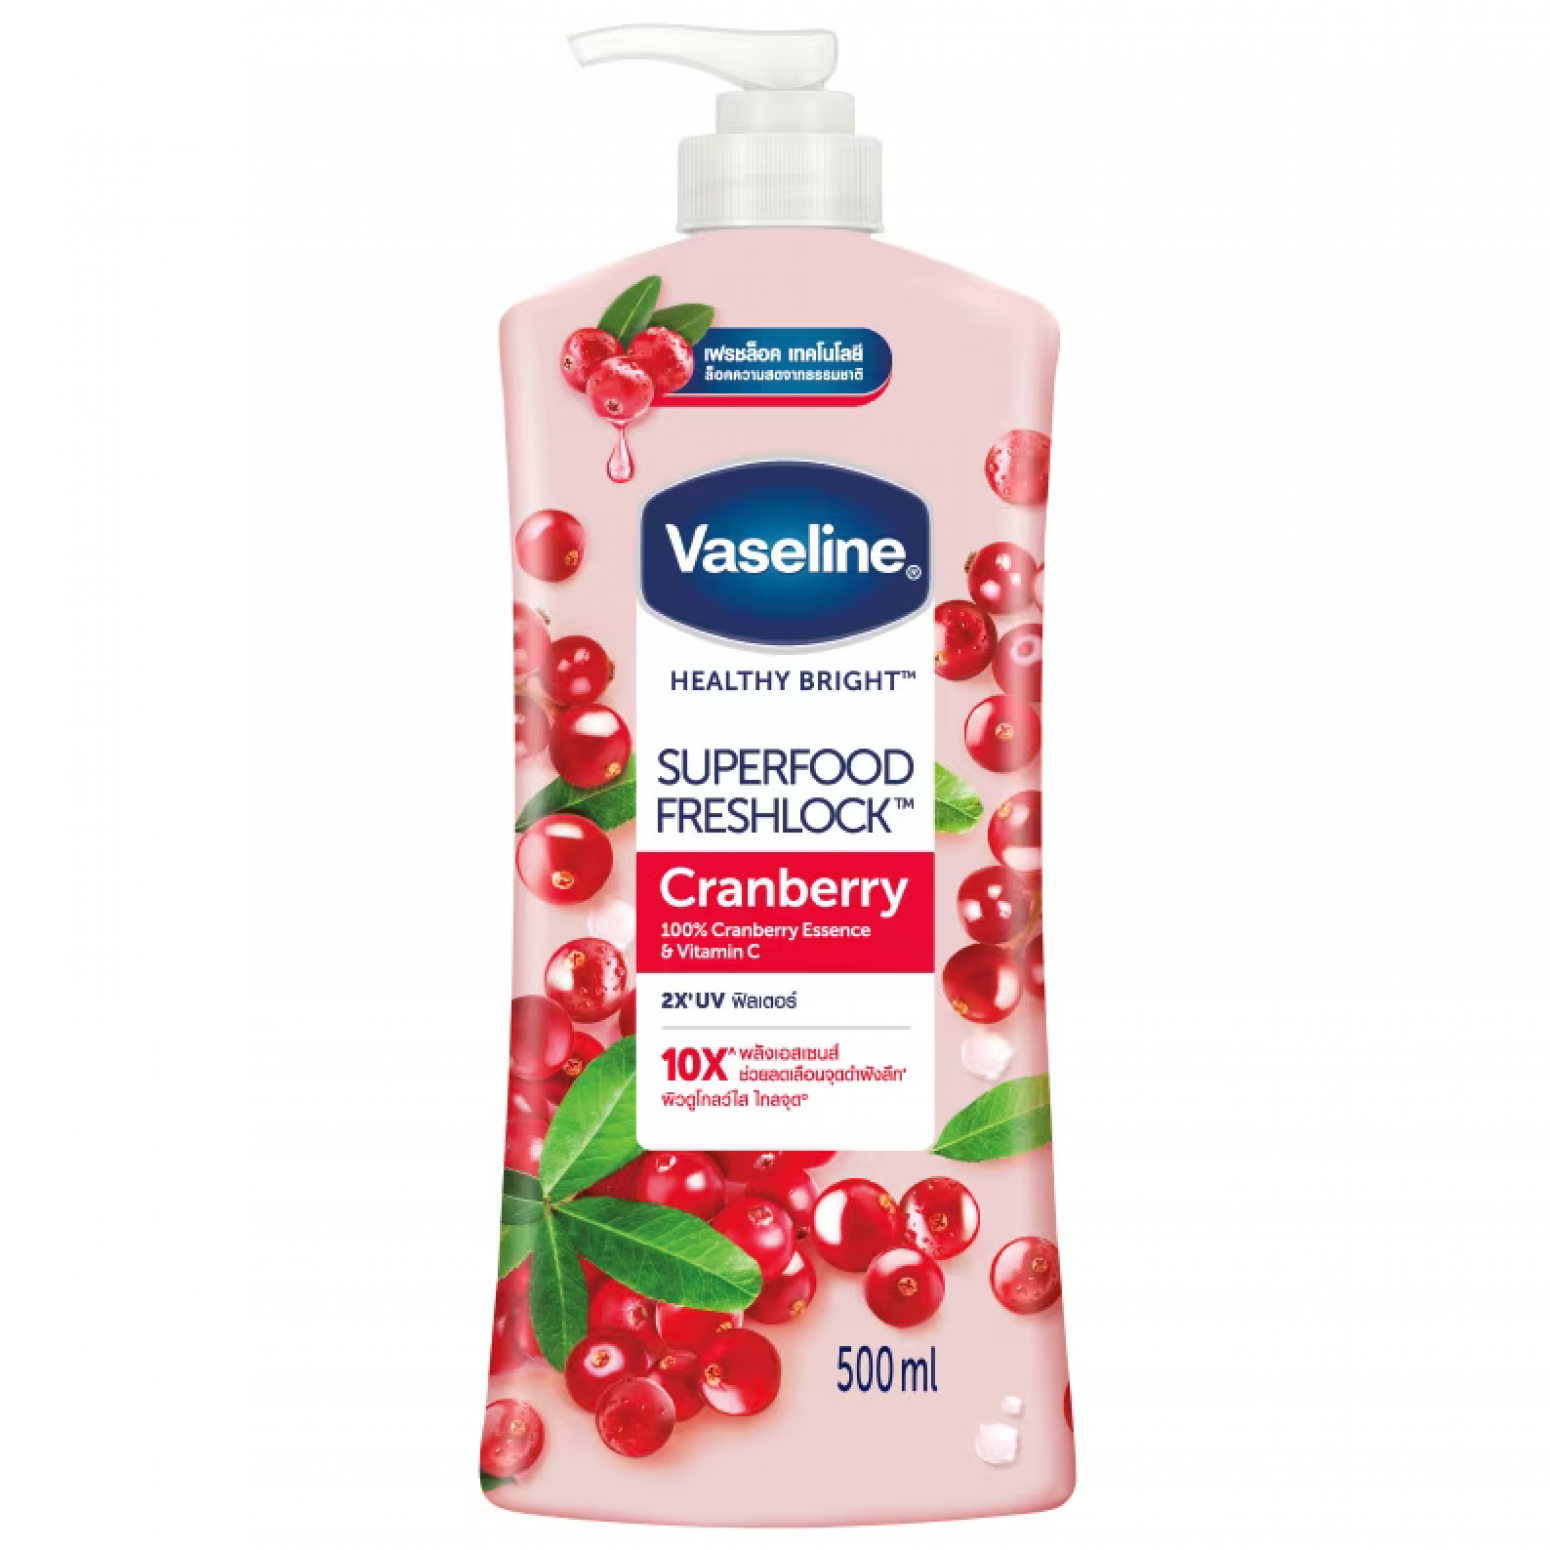 Vaseline Superfood Freshlock Cranberry Lotion 500ml